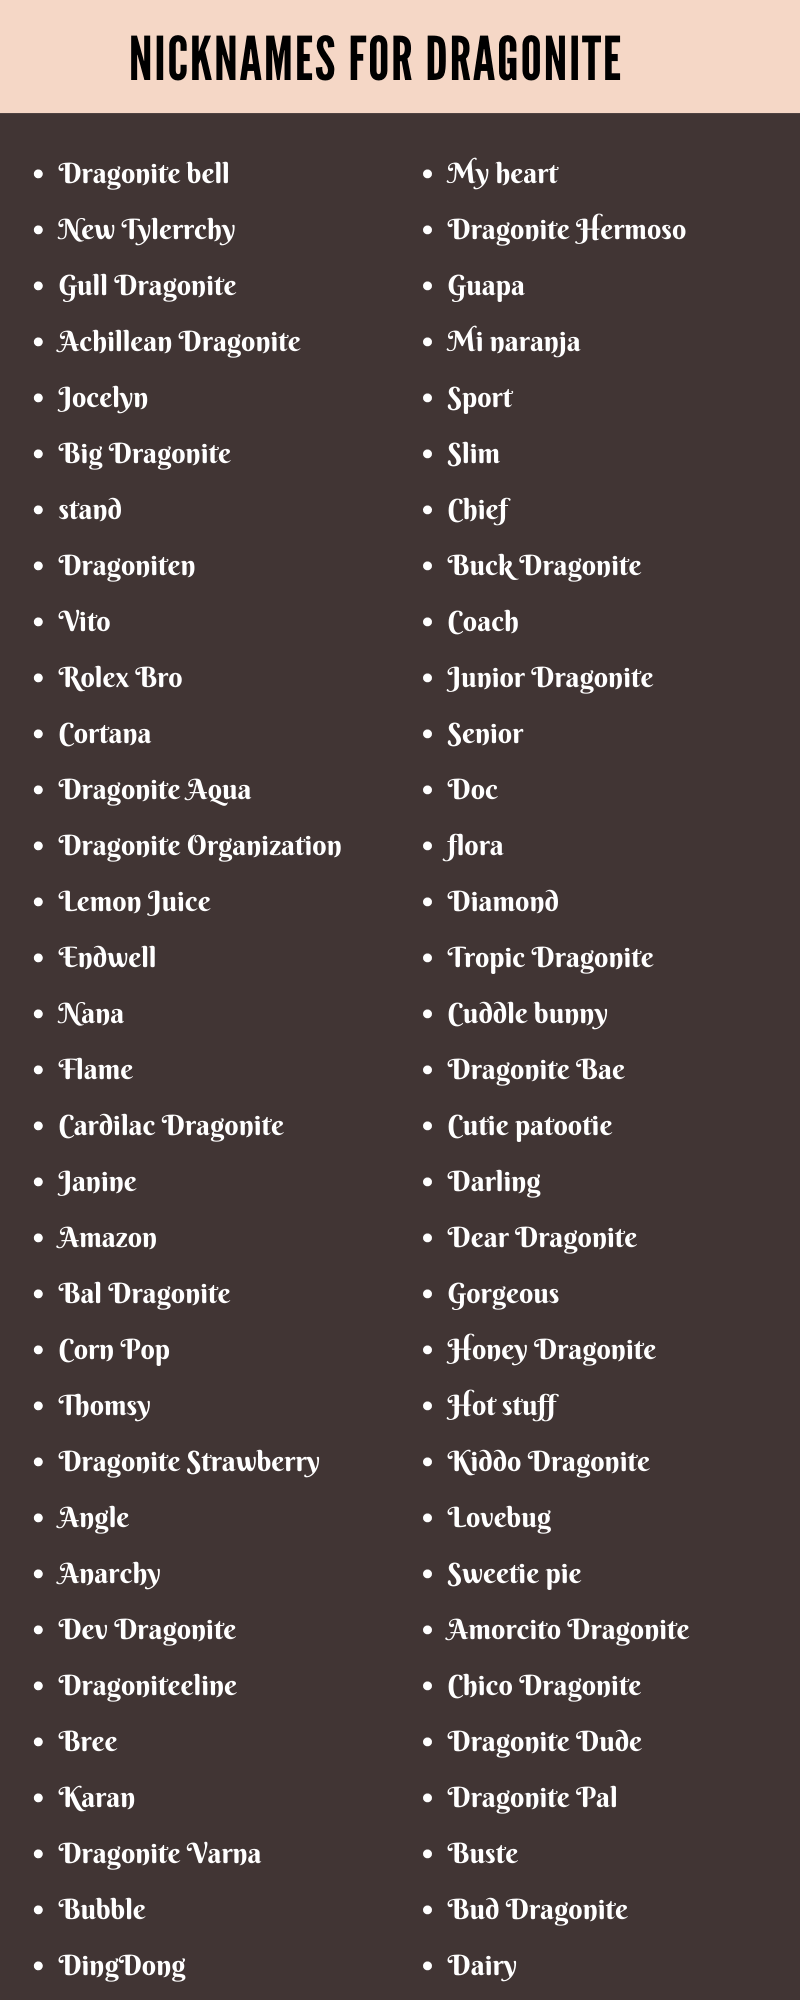 Nicknames For Dragonite